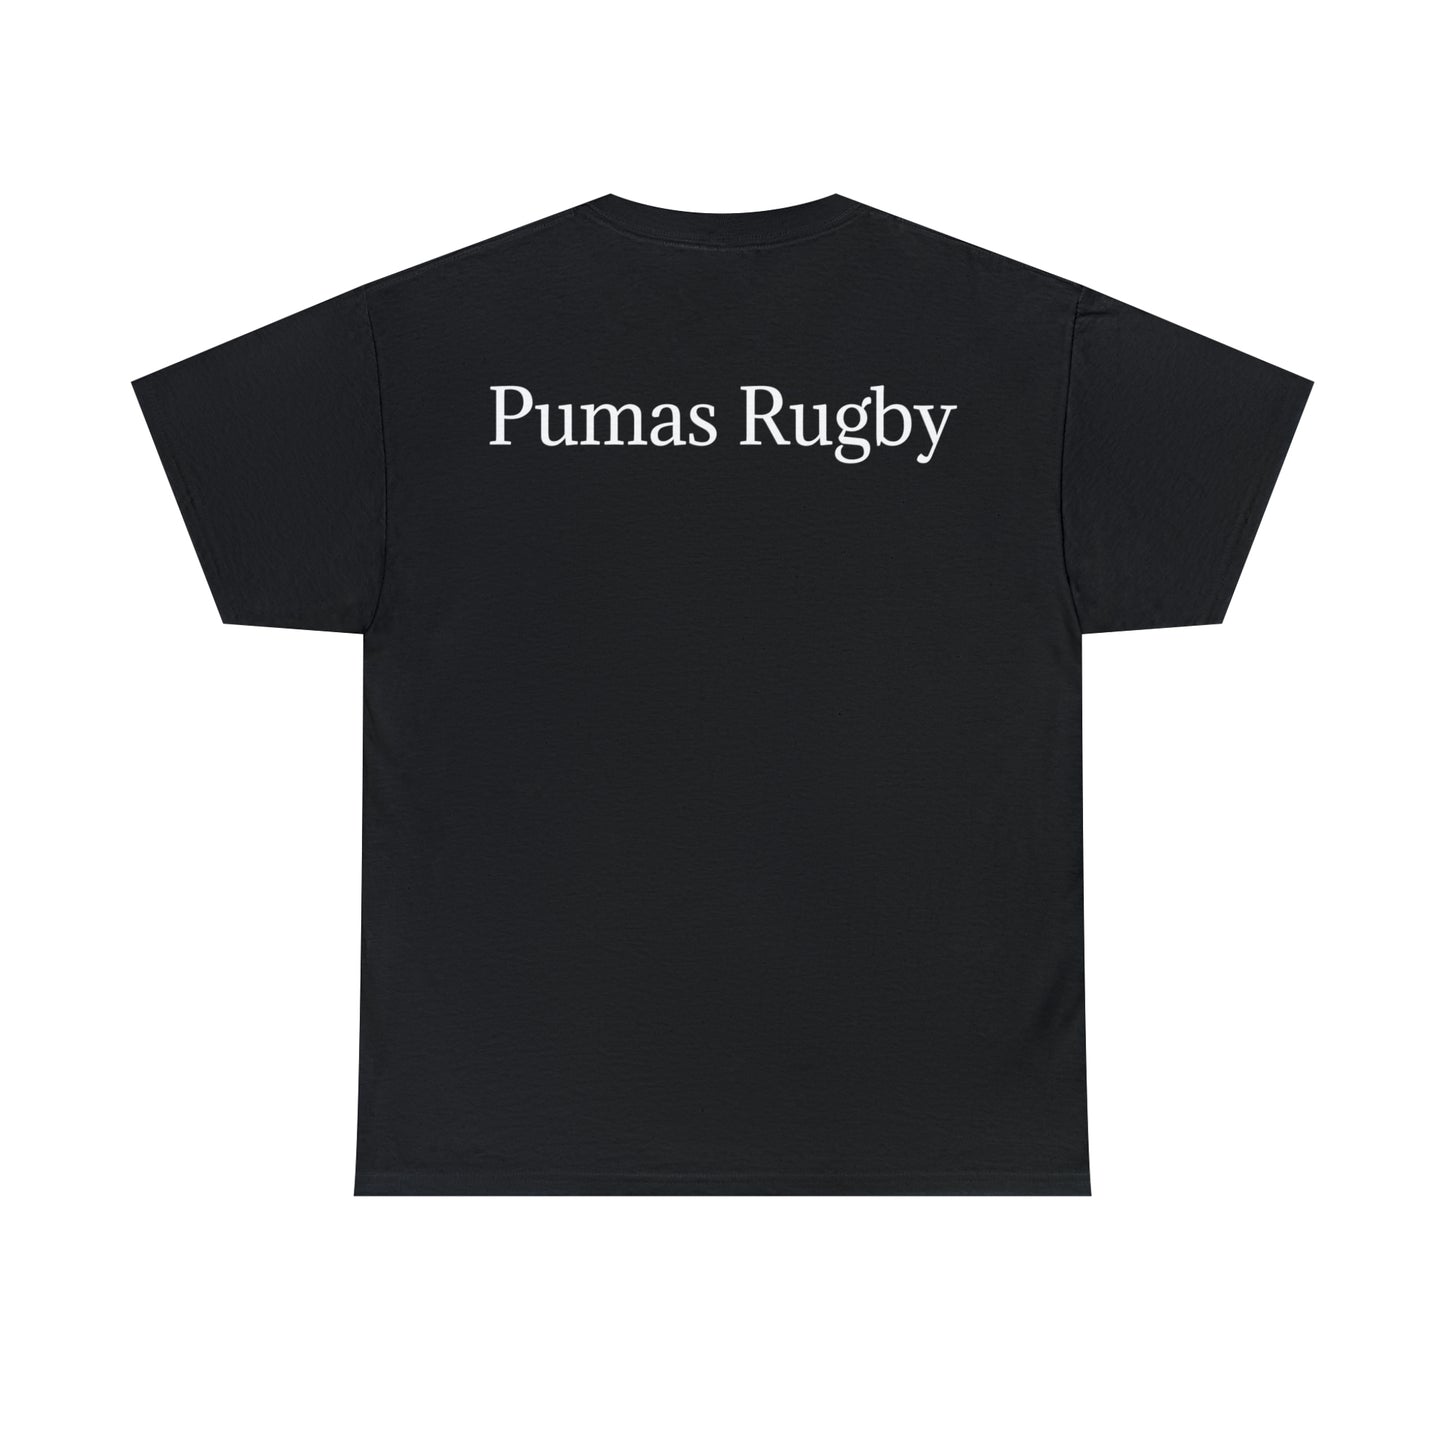 Pumas with RWC - black shirt